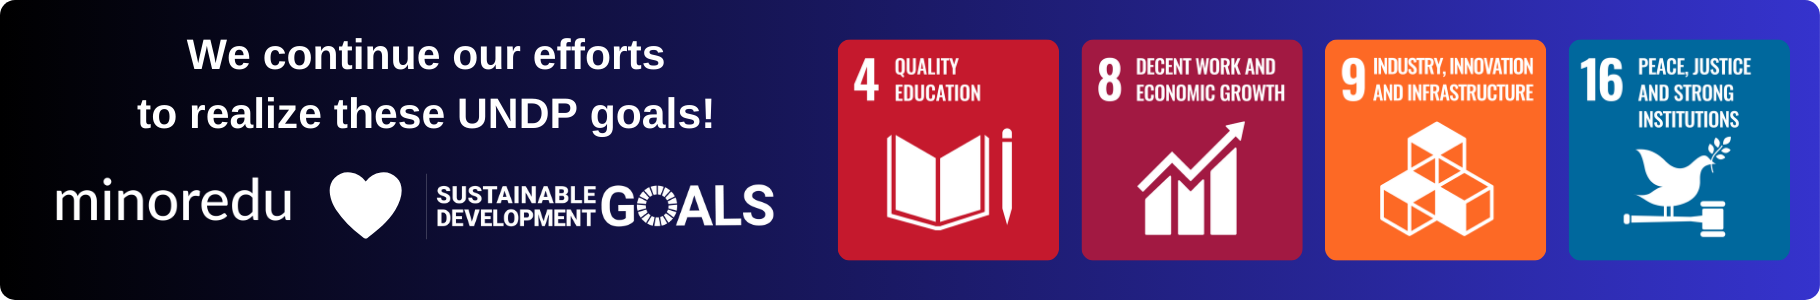 Minoredu UNDP | United Nations Development Programme Goals